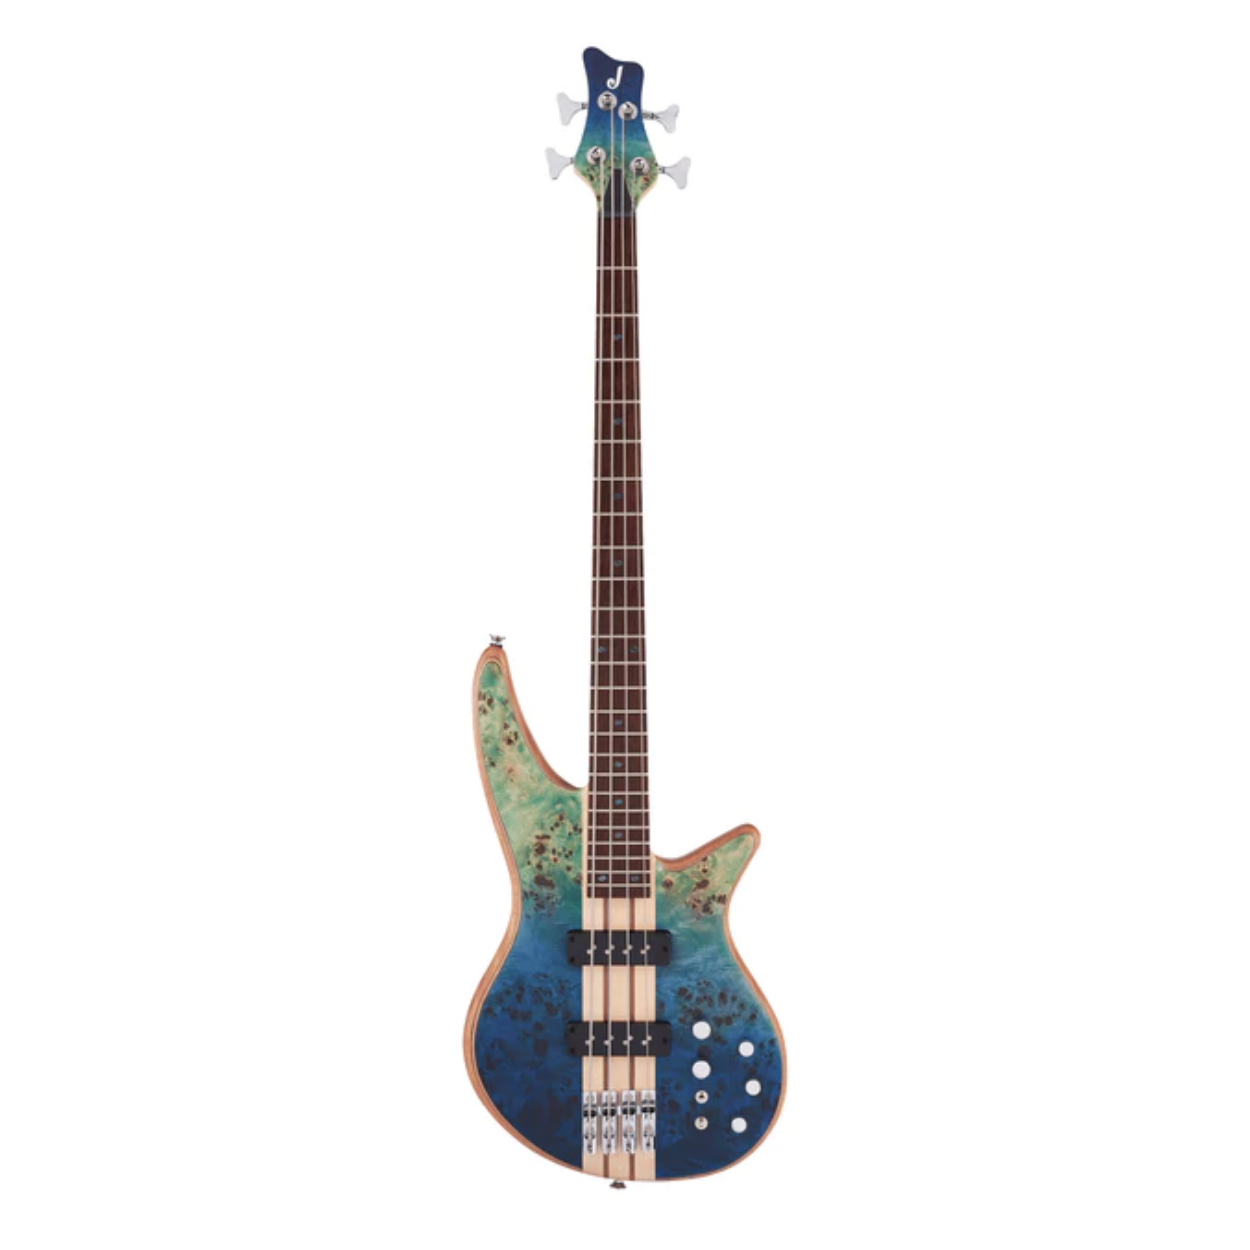 Jackson Pro Series Spectra SBP IV Bass Guitar, Caramelized Jatoba FB, Carribean Blue